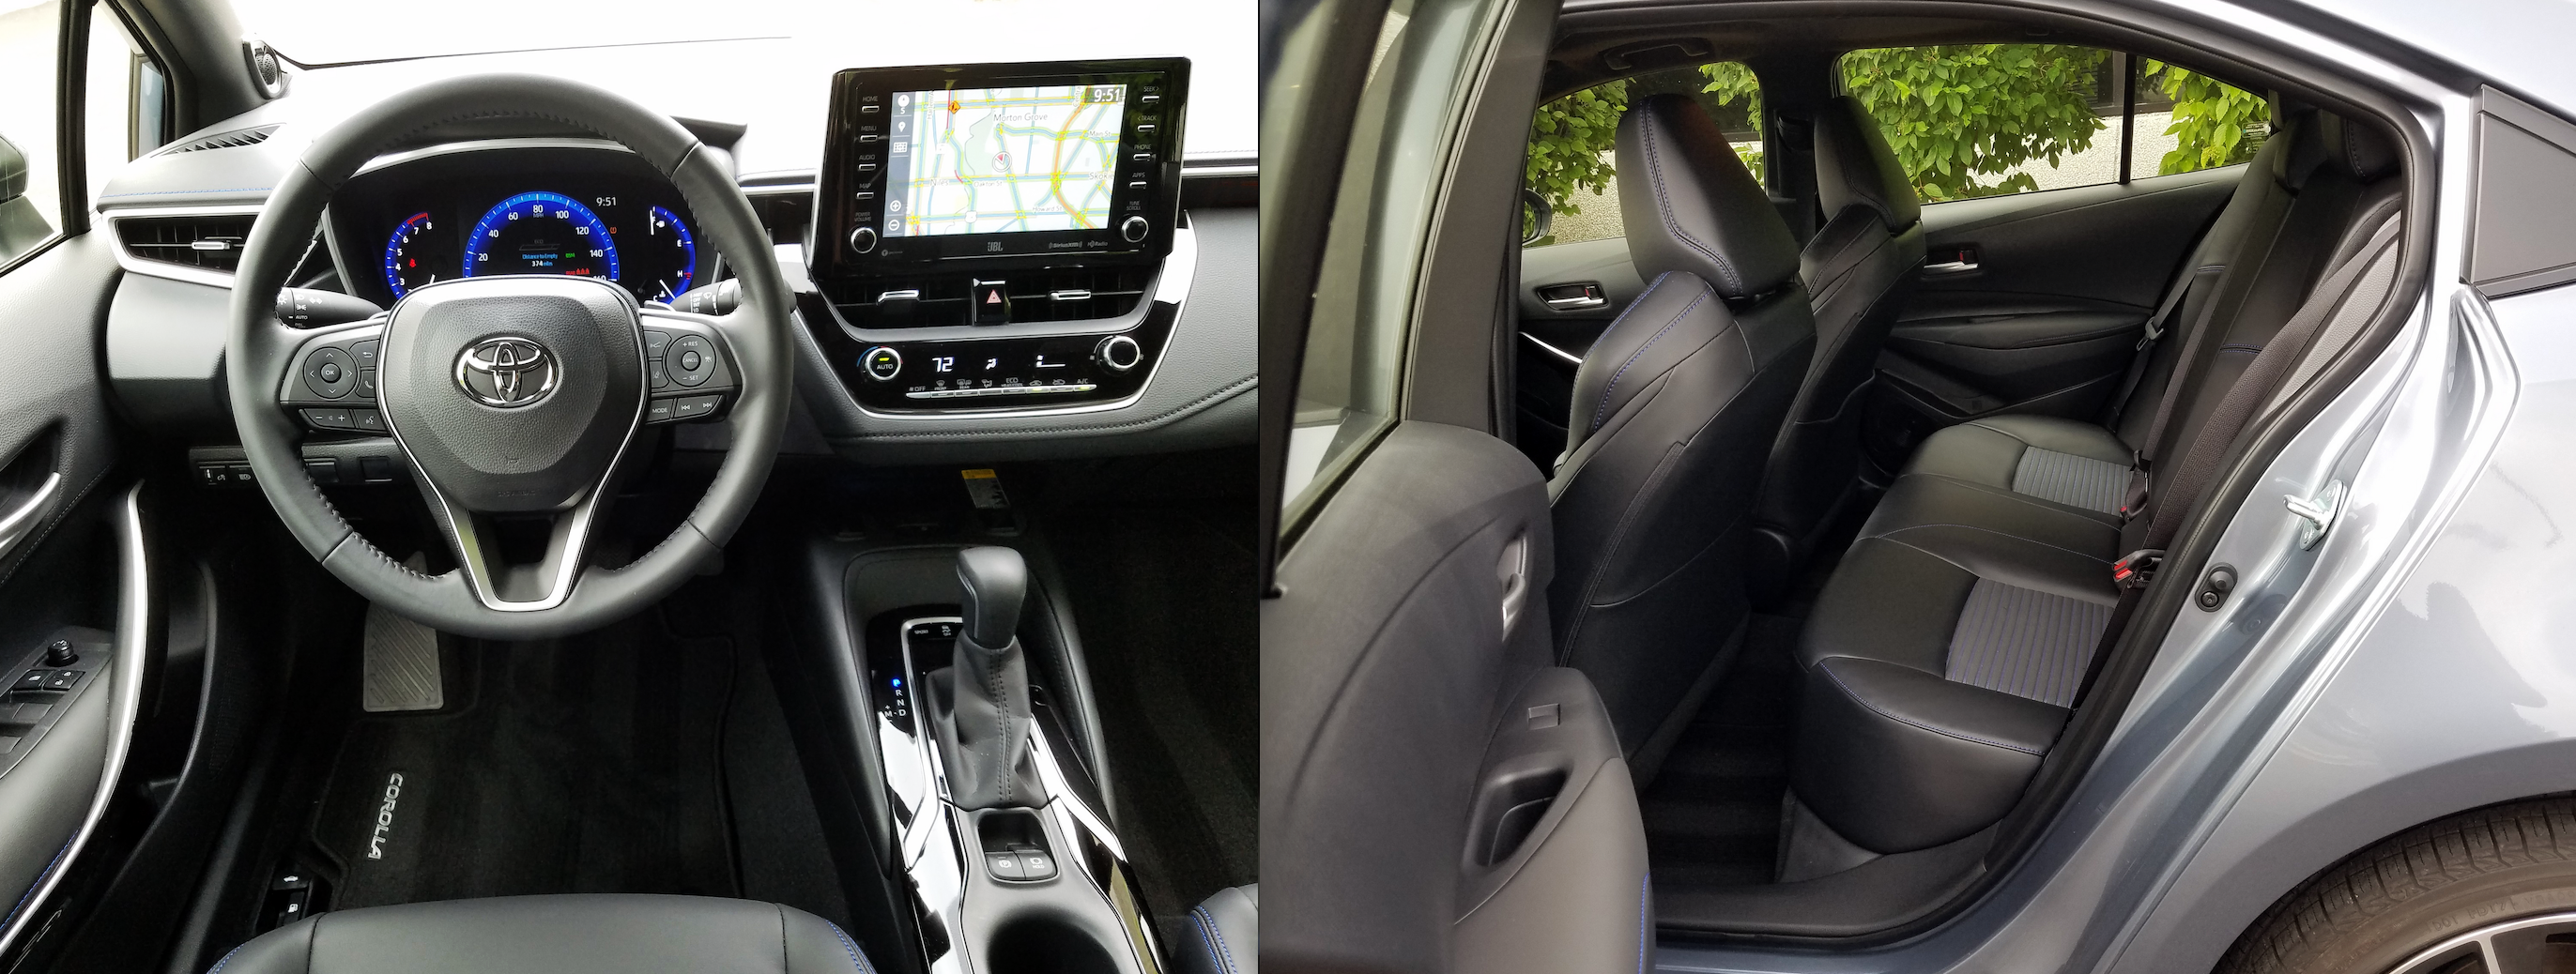 2020 Toyota Corolla XSE, Rear seat, steering wheel, navigation system